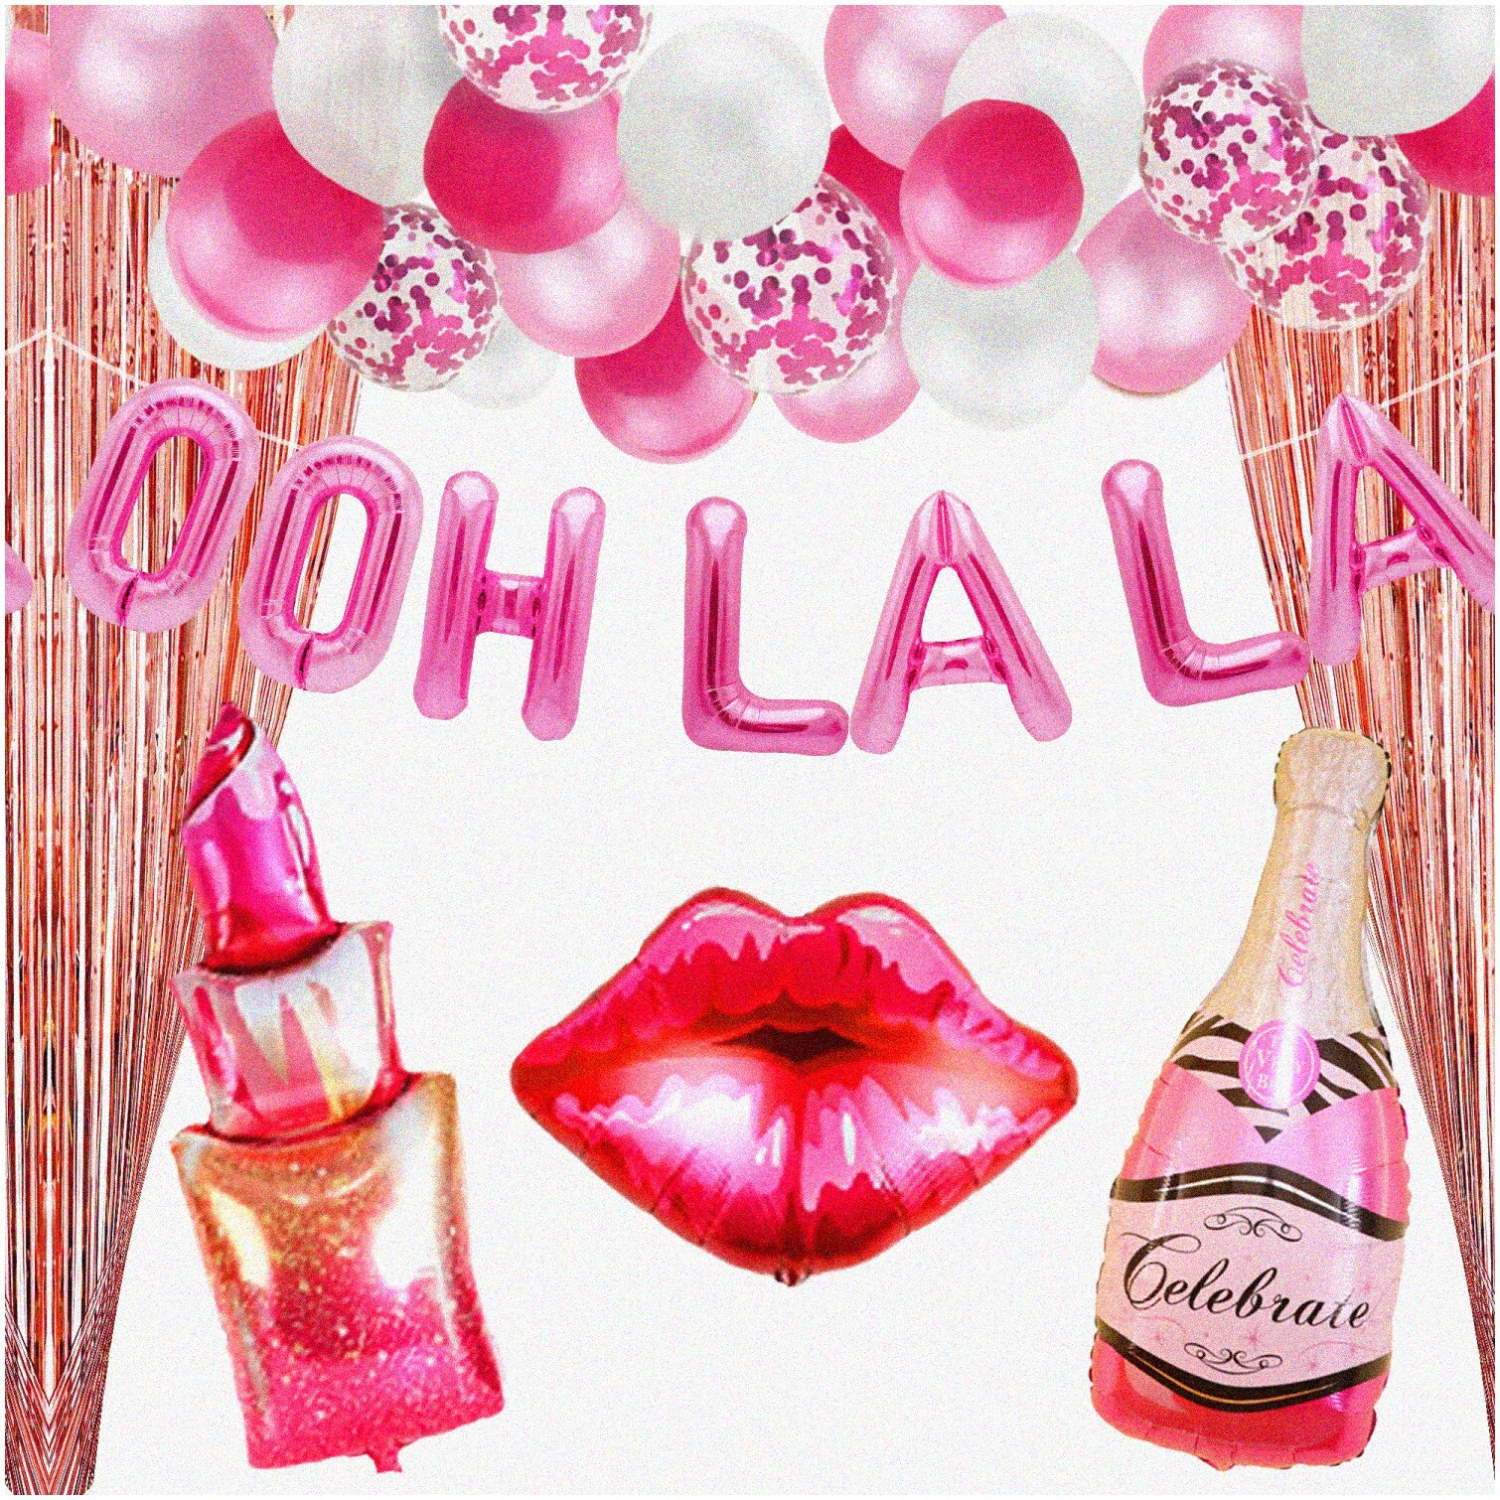 Party Perfection: Ooh La La Celebration Kit - Birthday, Shower, Bachelorette, Slumber, Sleepover, Girls Night Decorations